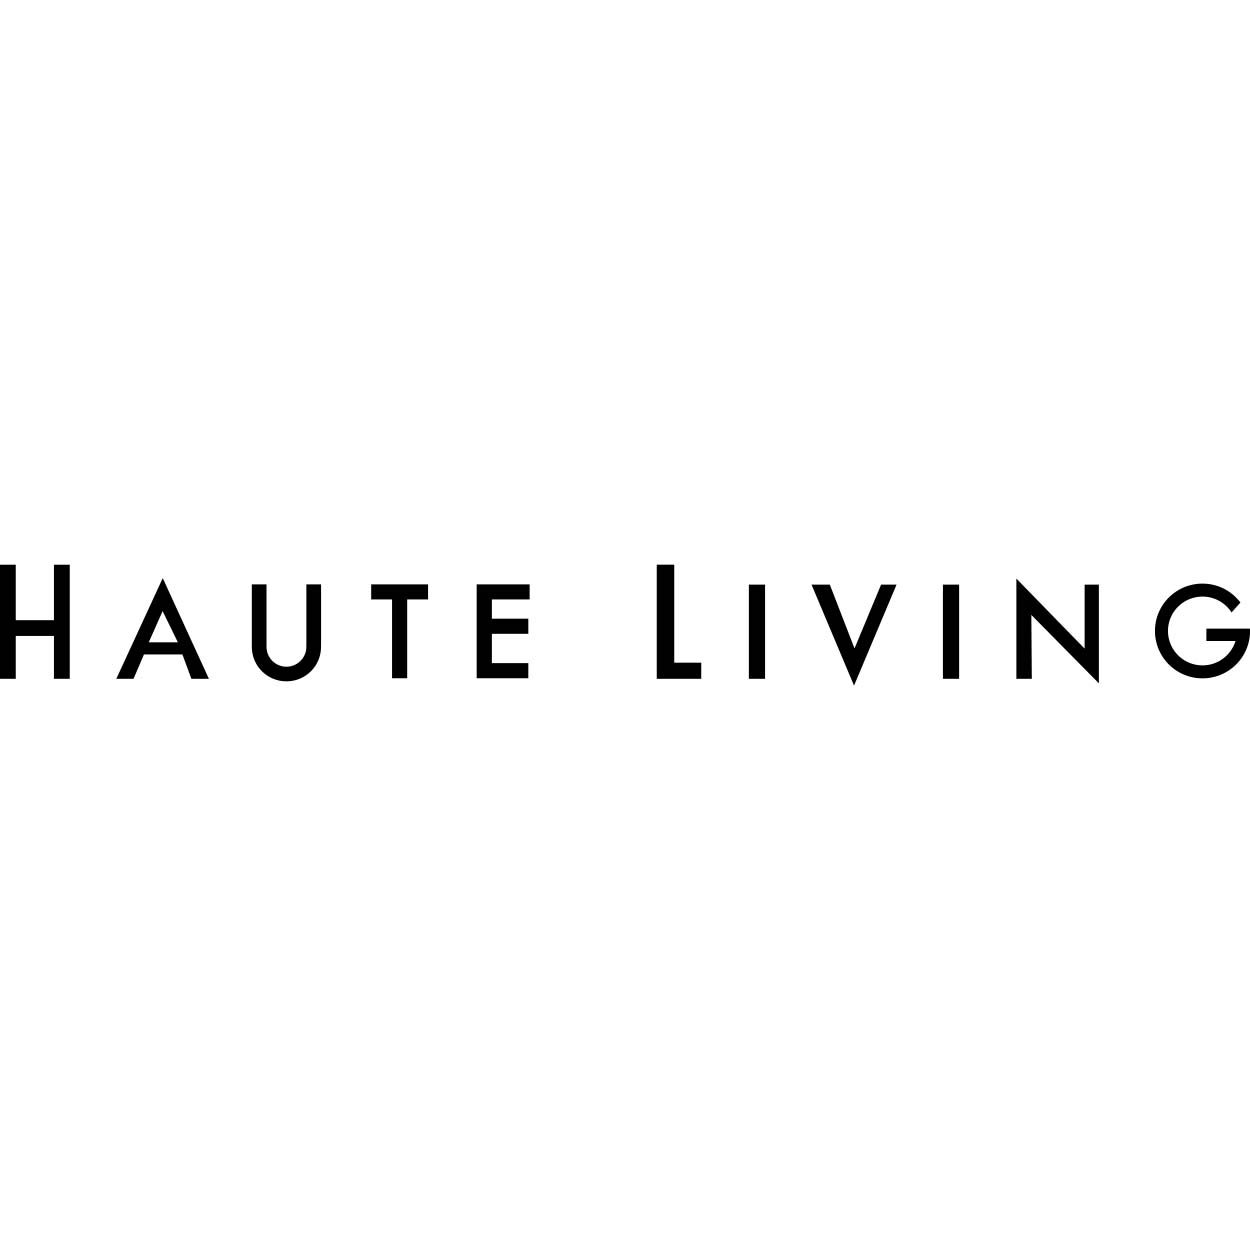 Haute Living magazine logo